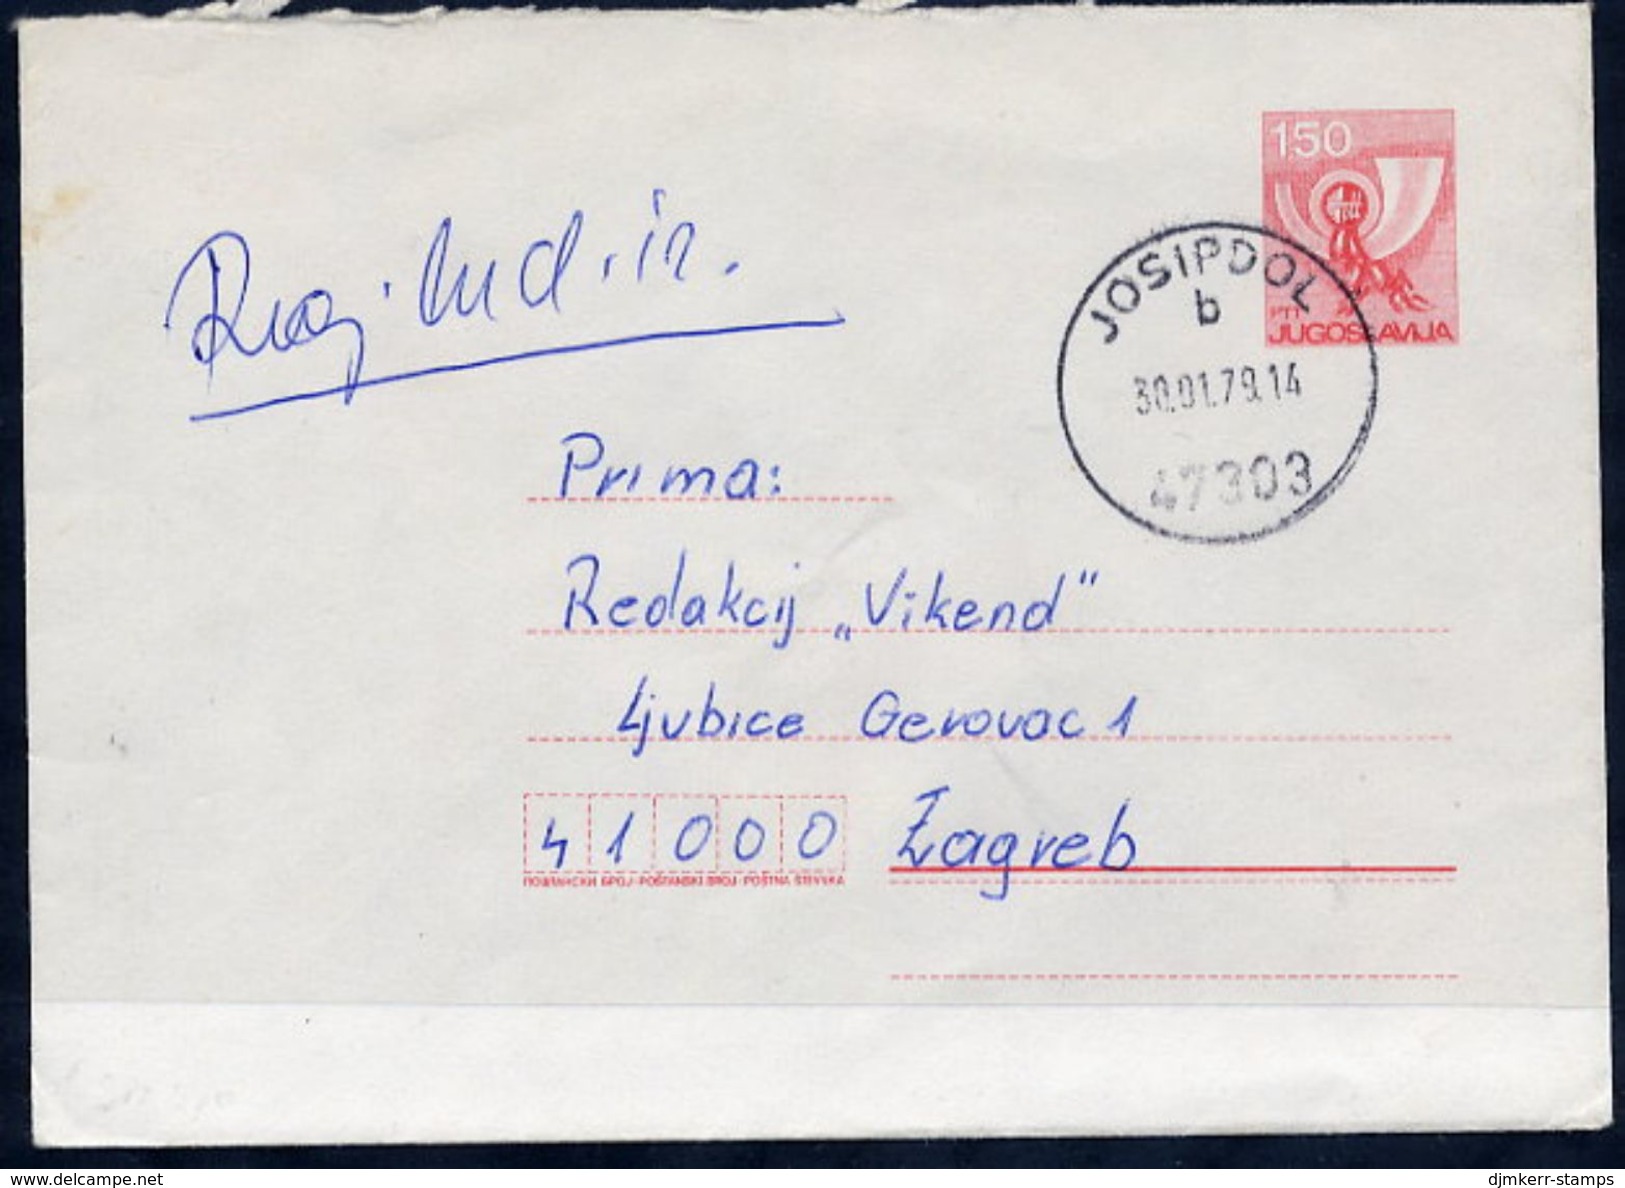 YUGOSLAVIA 1977 Posthorn 1.50 D.stationery Envelope Used Without Additional Franking.  Michel U70 - Postal Stationery